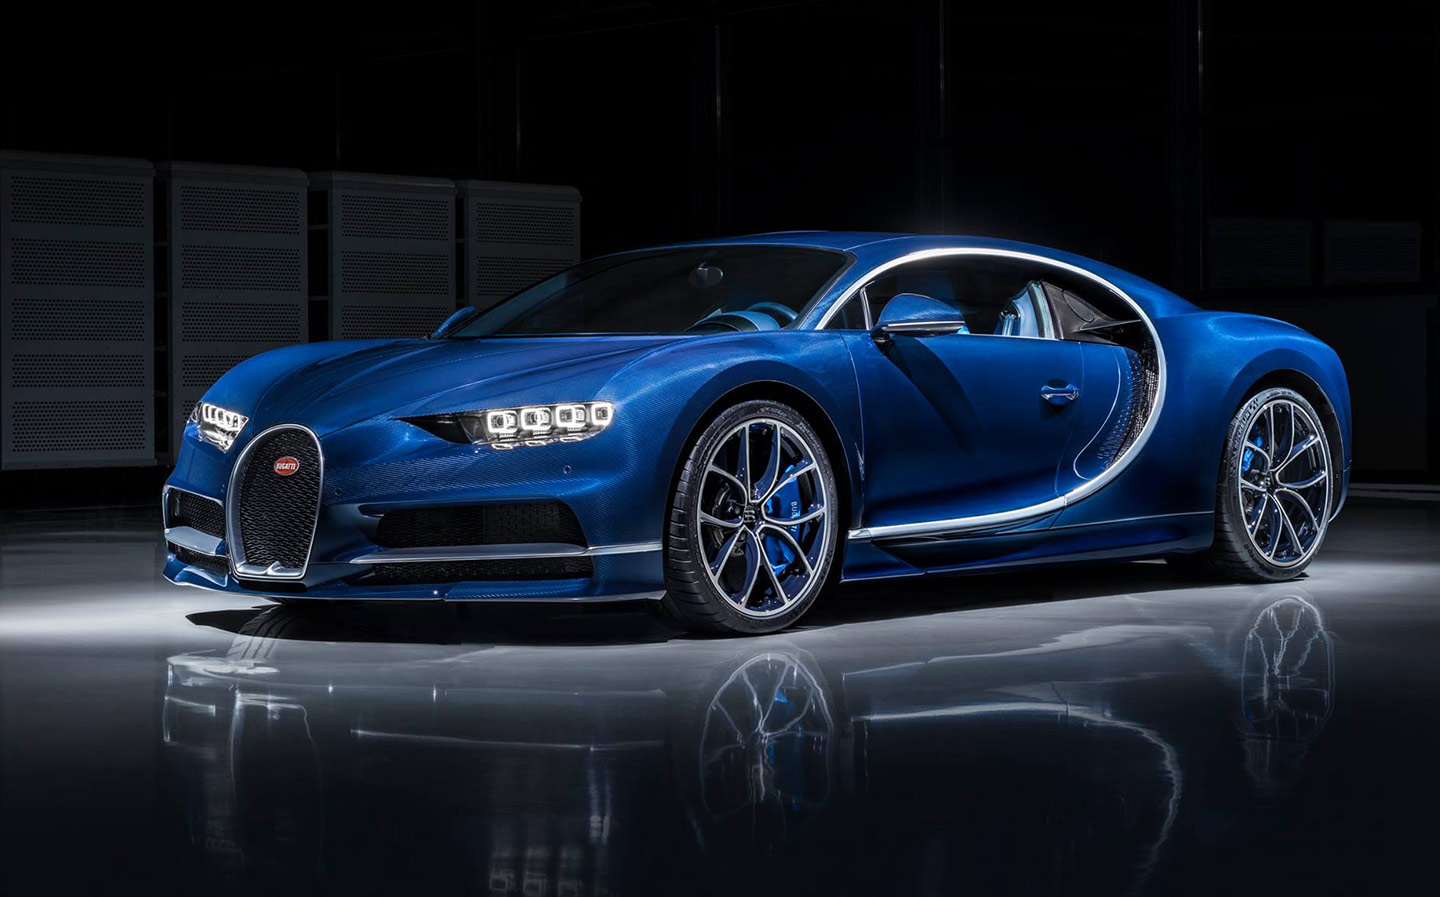 Jeremy Clarkson reviews the Bugatti Chiron